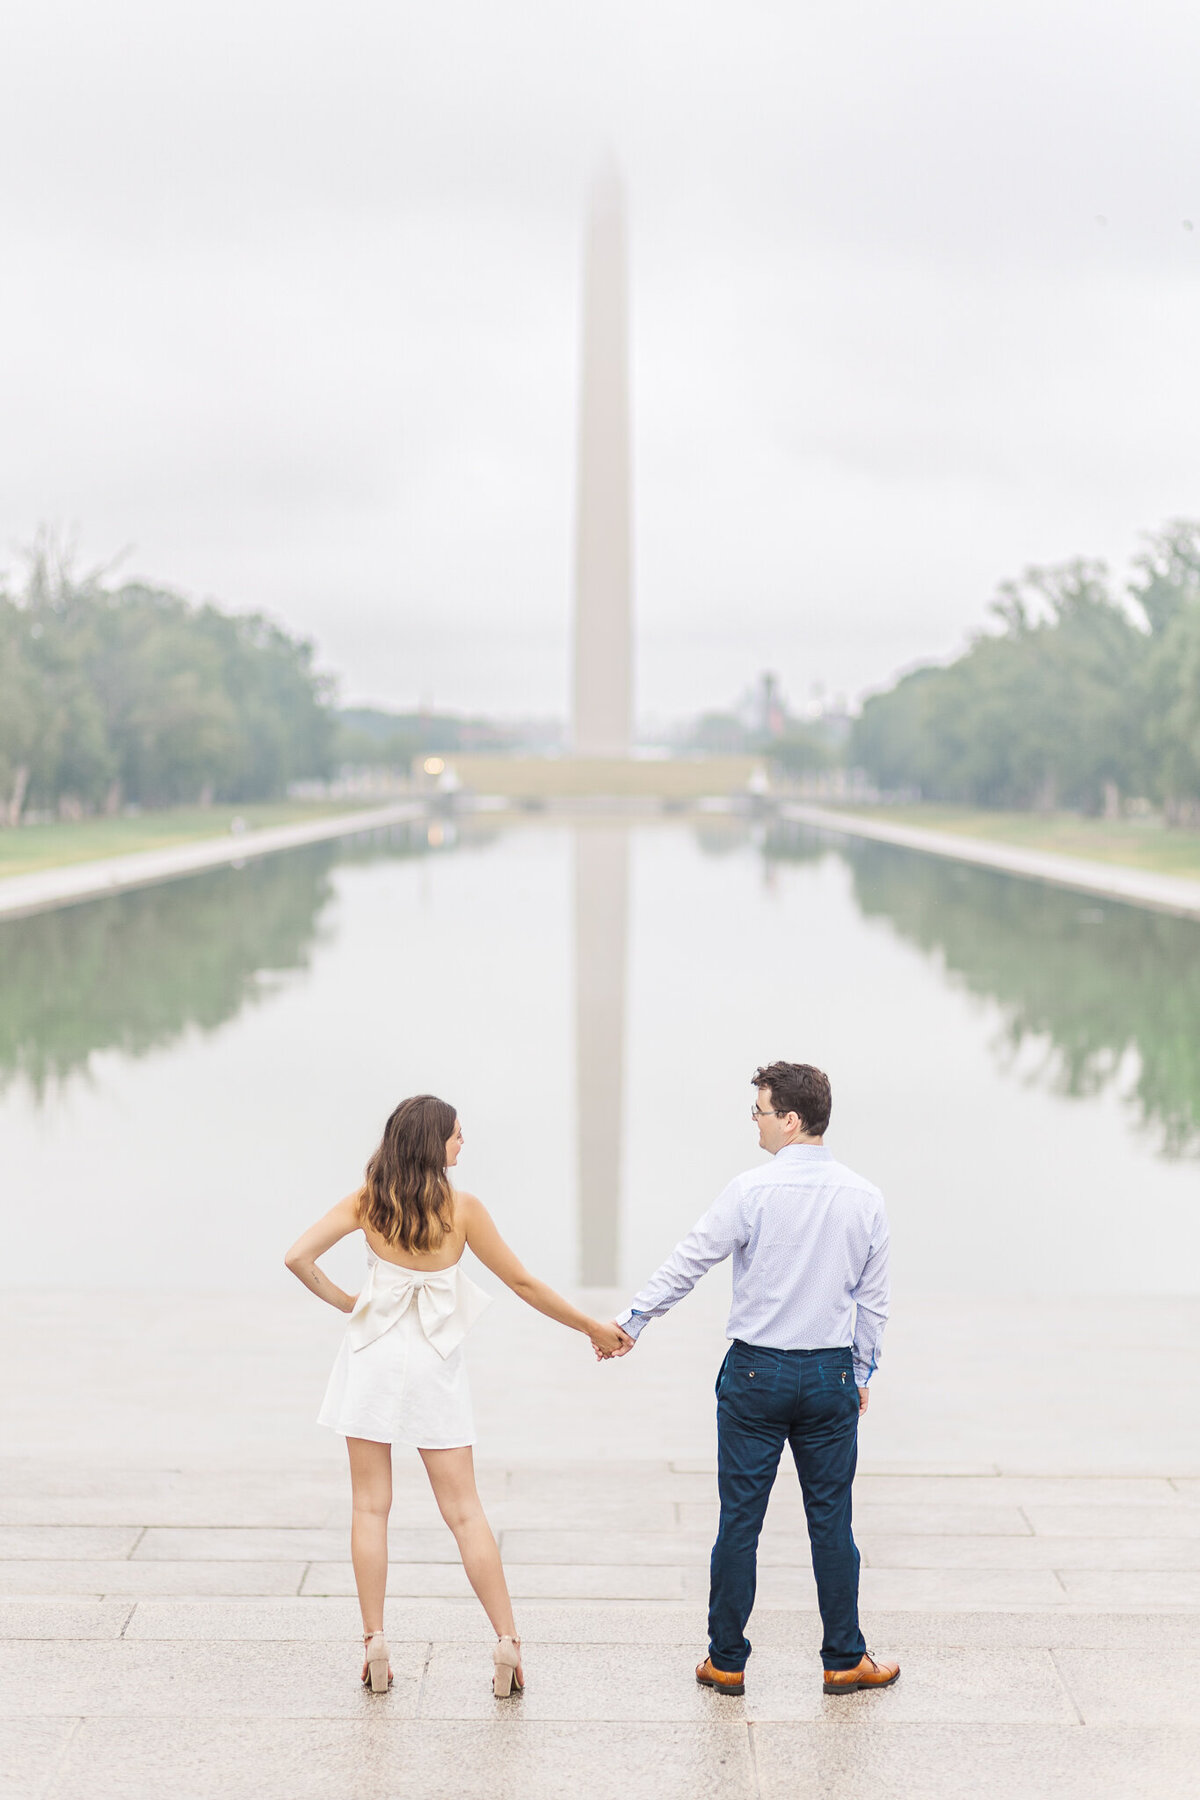 Karisa-Denae-Photography-Lincoln-Memorial-Washington-Monument-Engagement-Photos-5